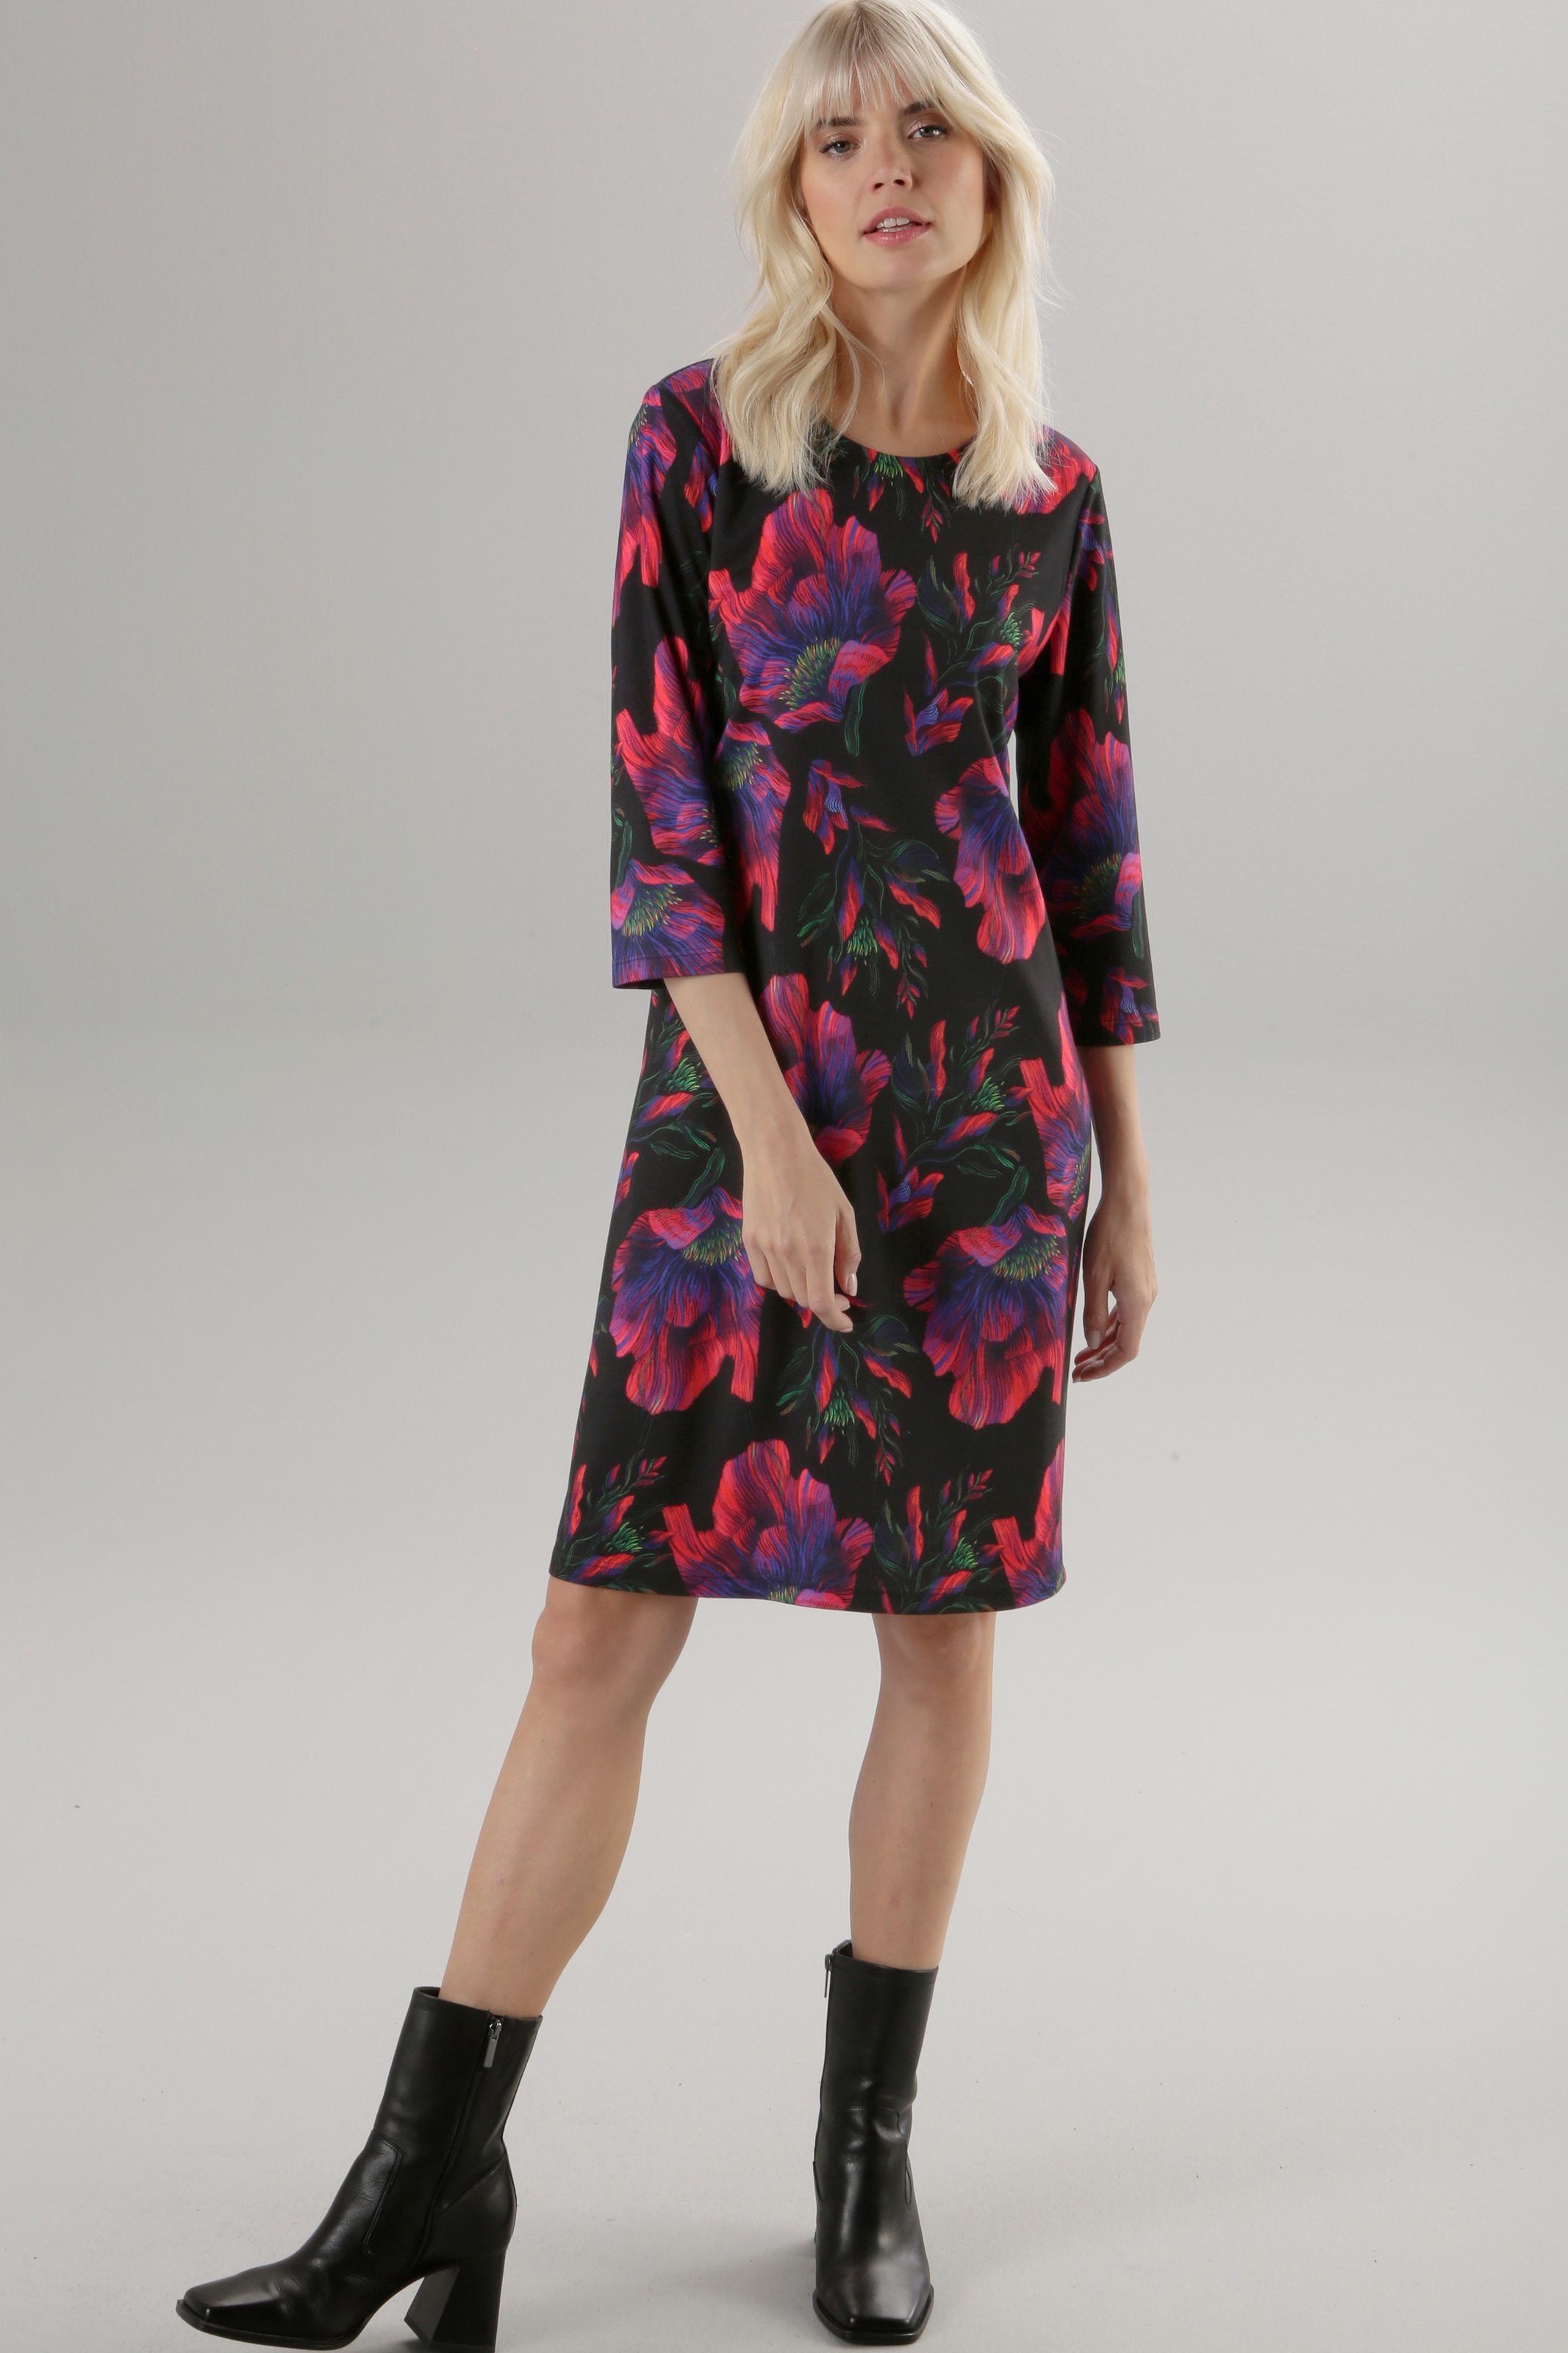 SELECTED Blumendruck Jerseykleid, Knallfarben kaufen mit in Aniston